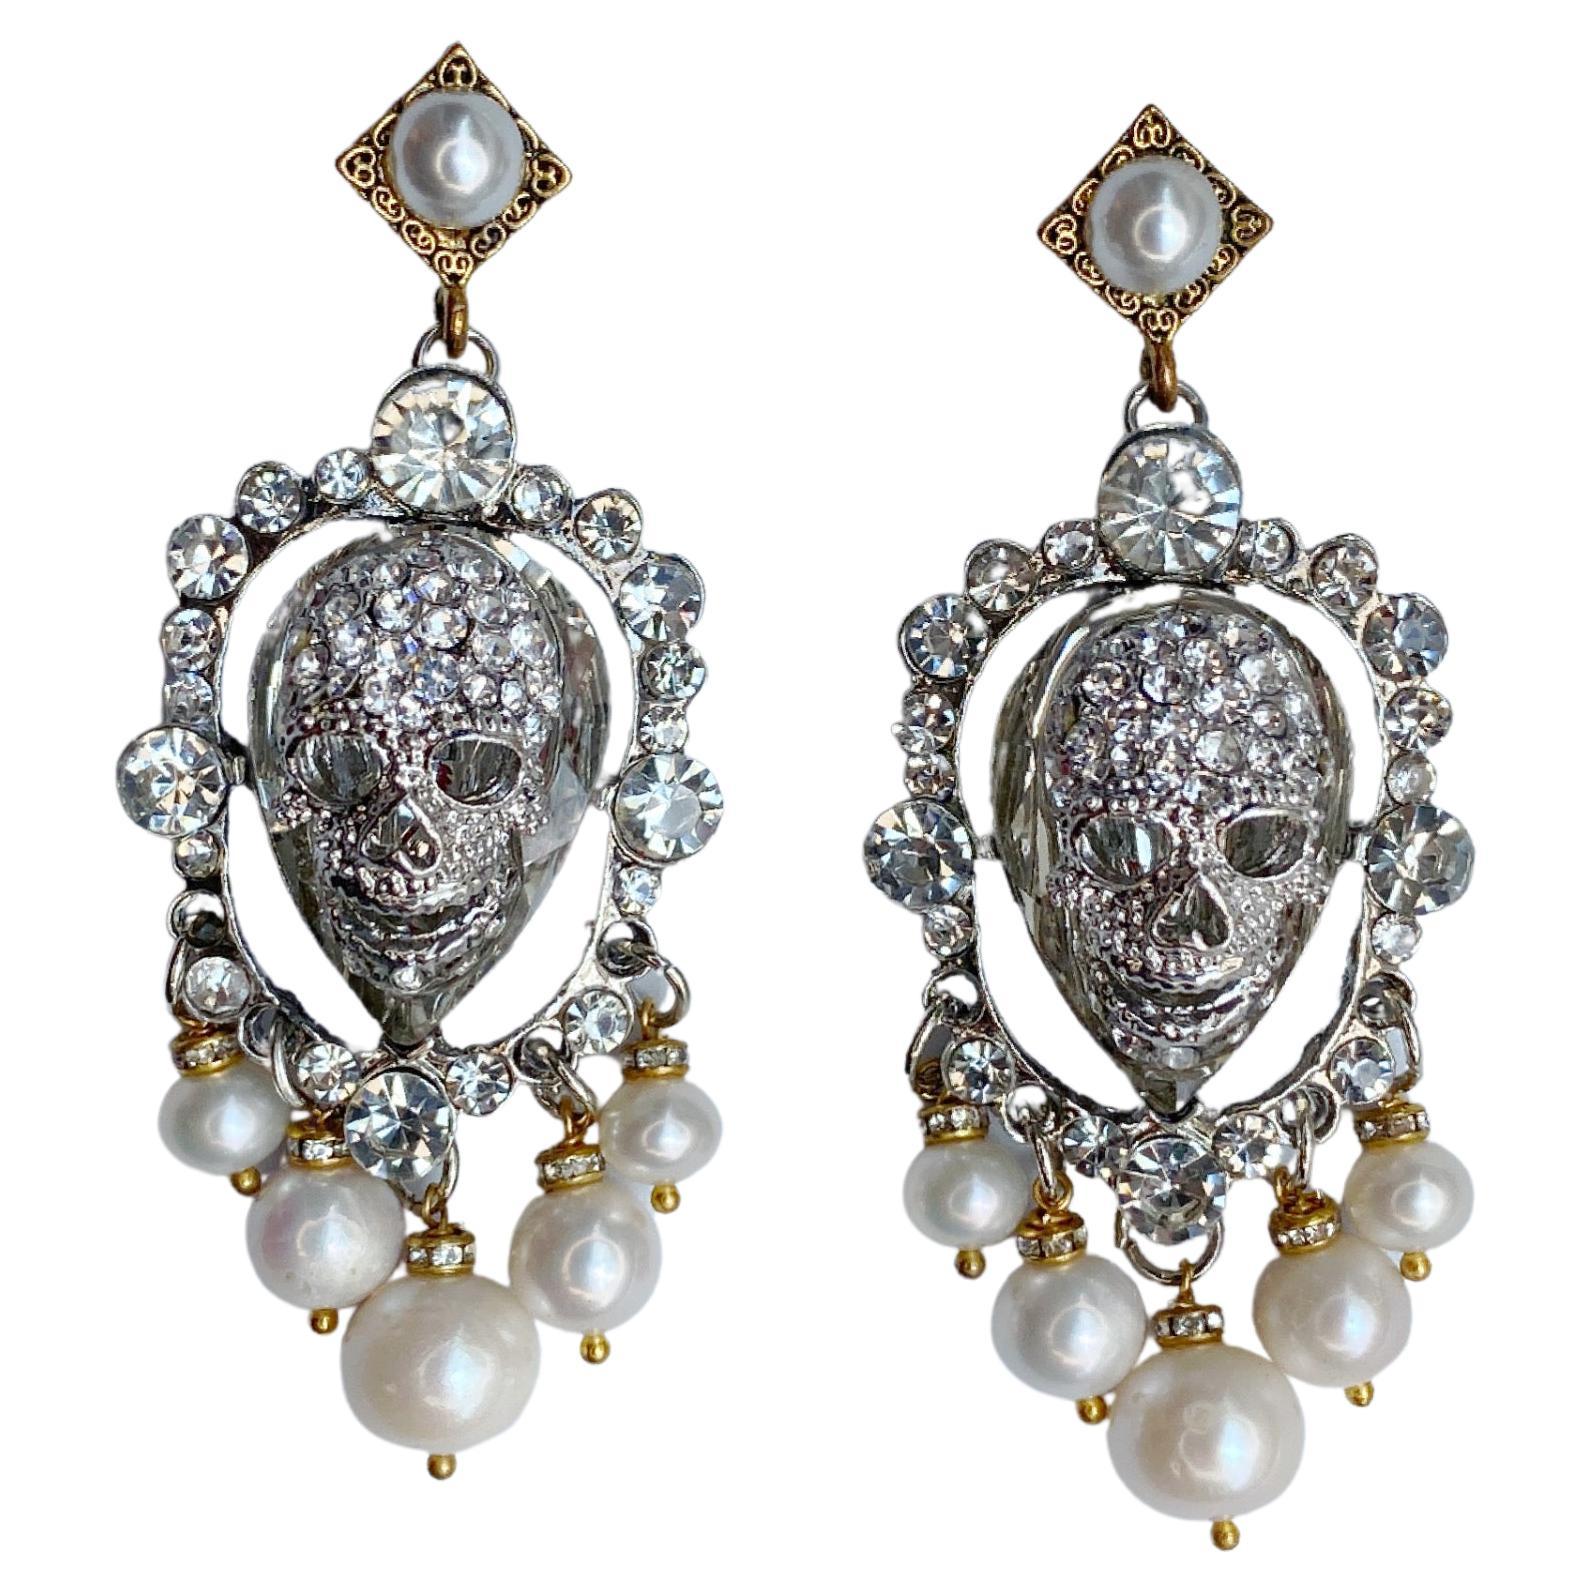 Crystal skull and freshwater pearl earrings by Sebastian Jaramillo